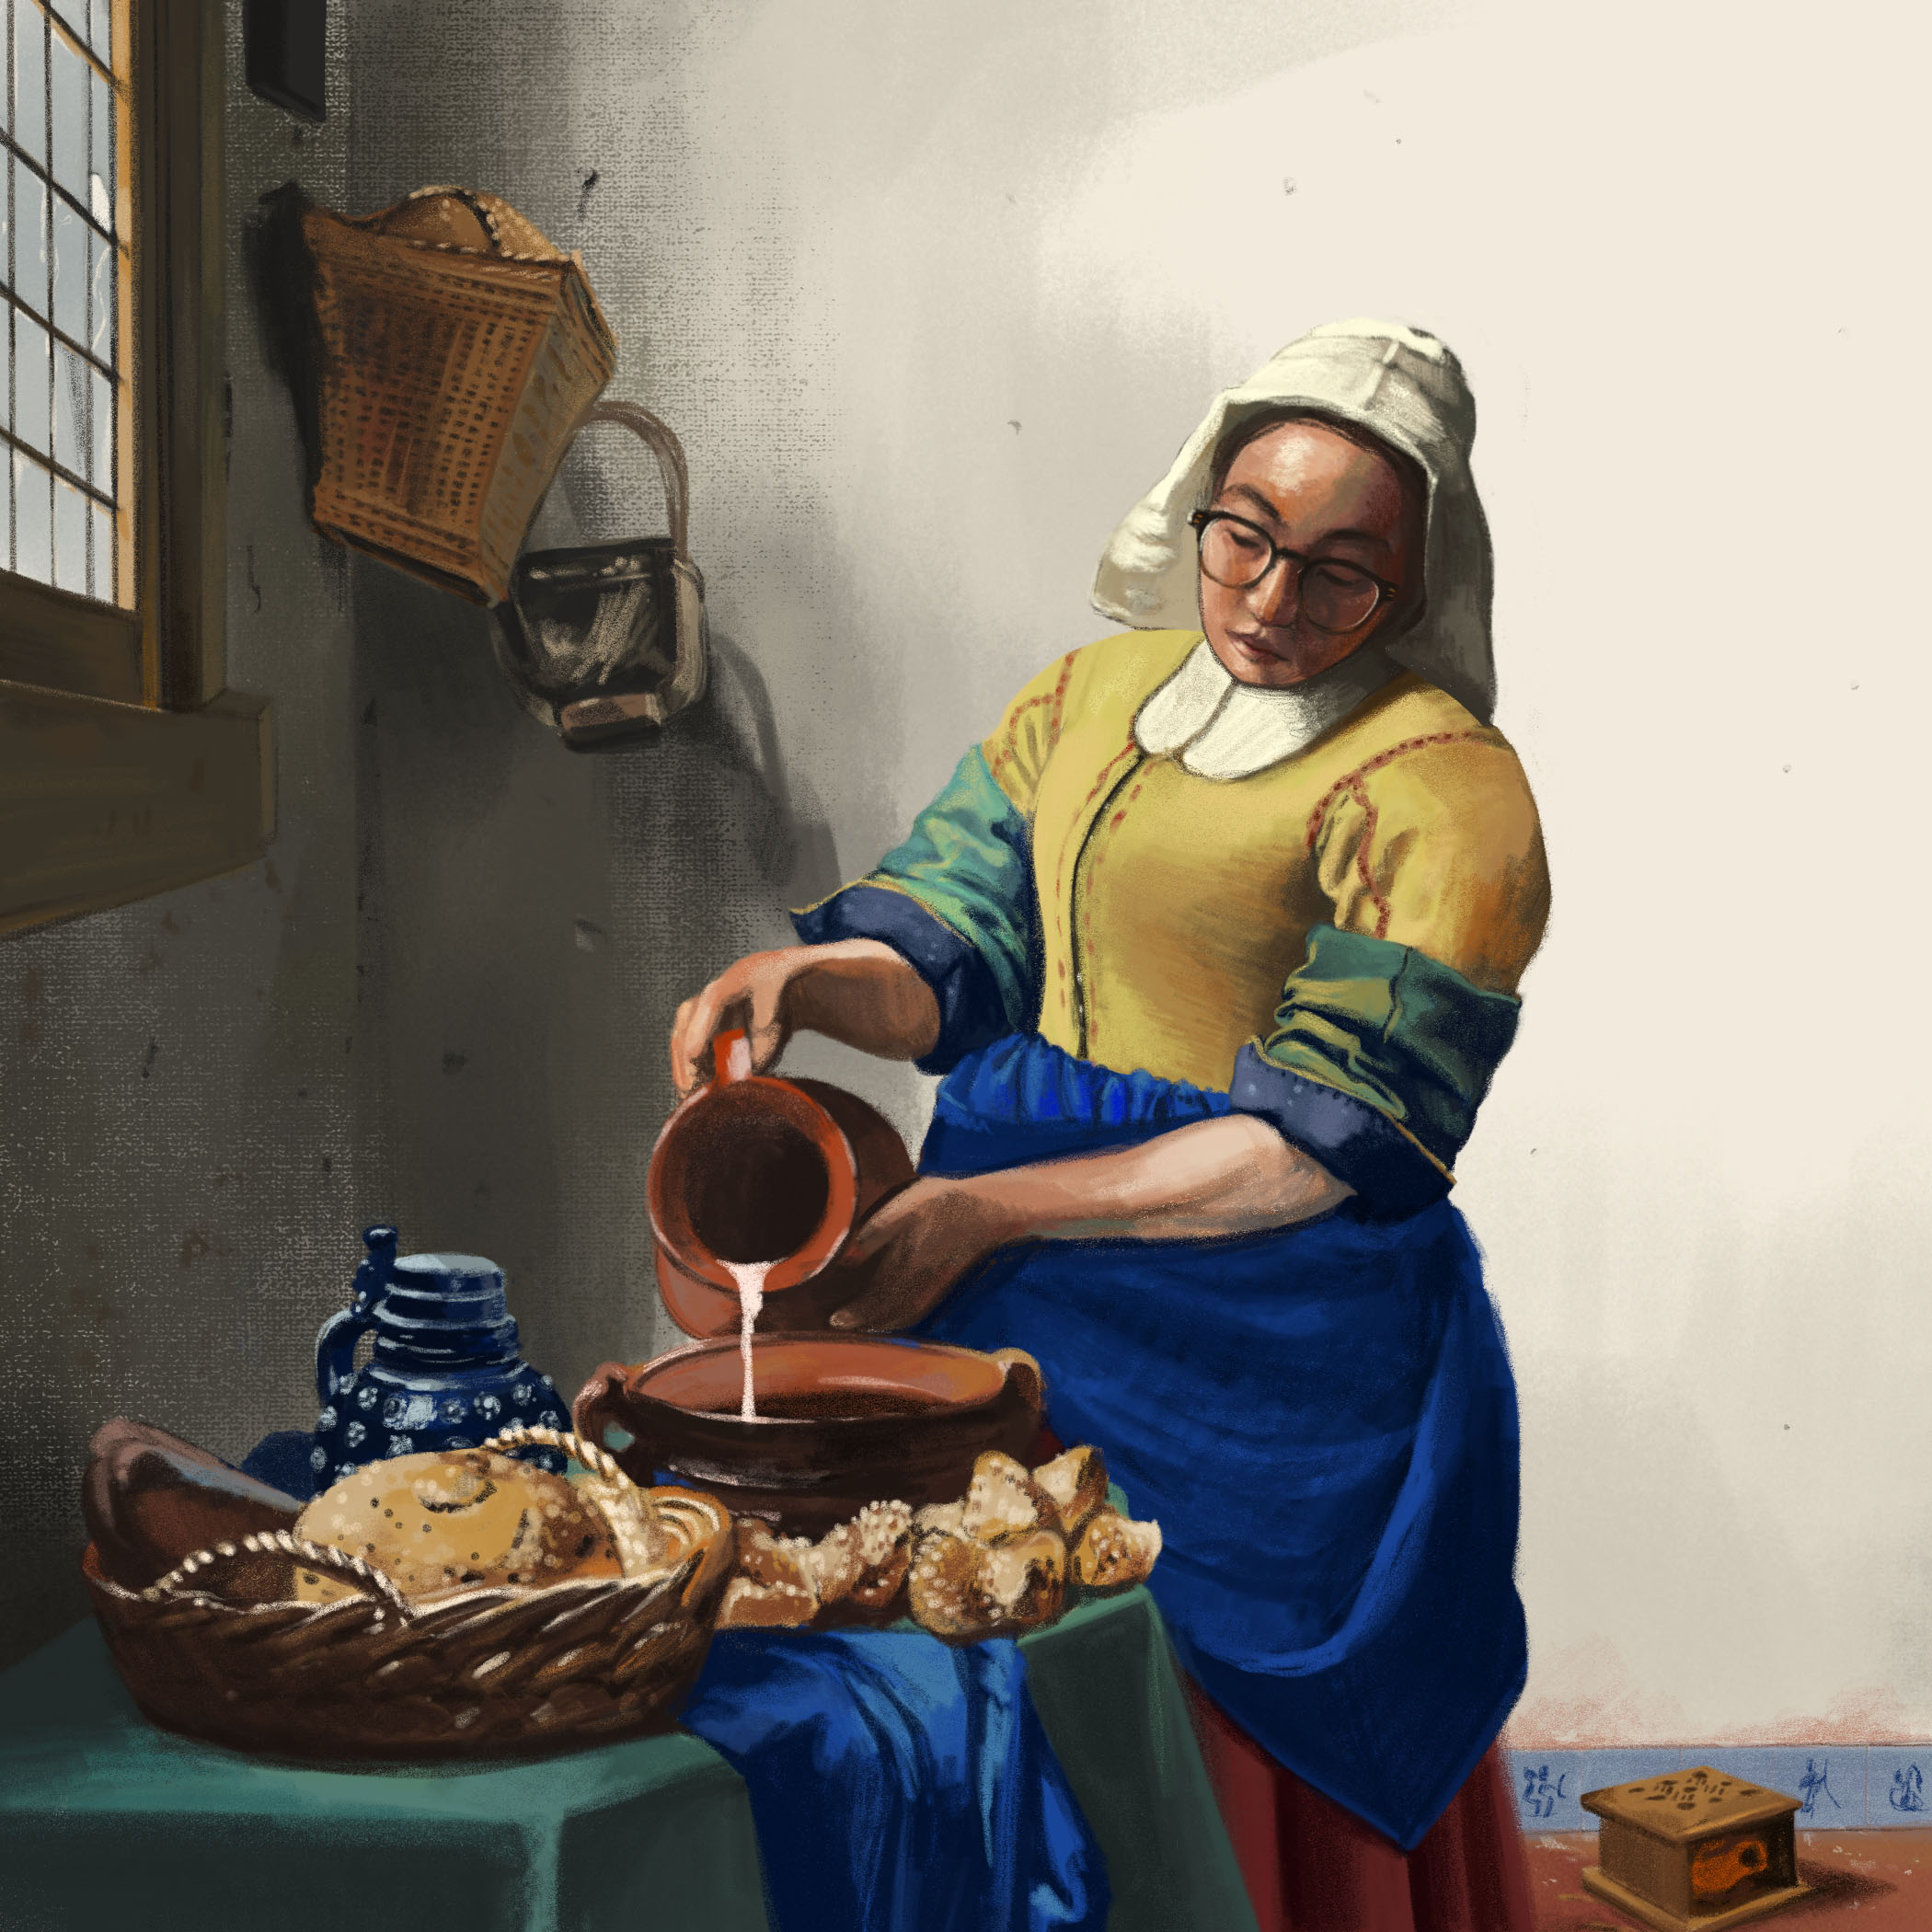 My copy of The Milkmaid by Johannes Vermeer